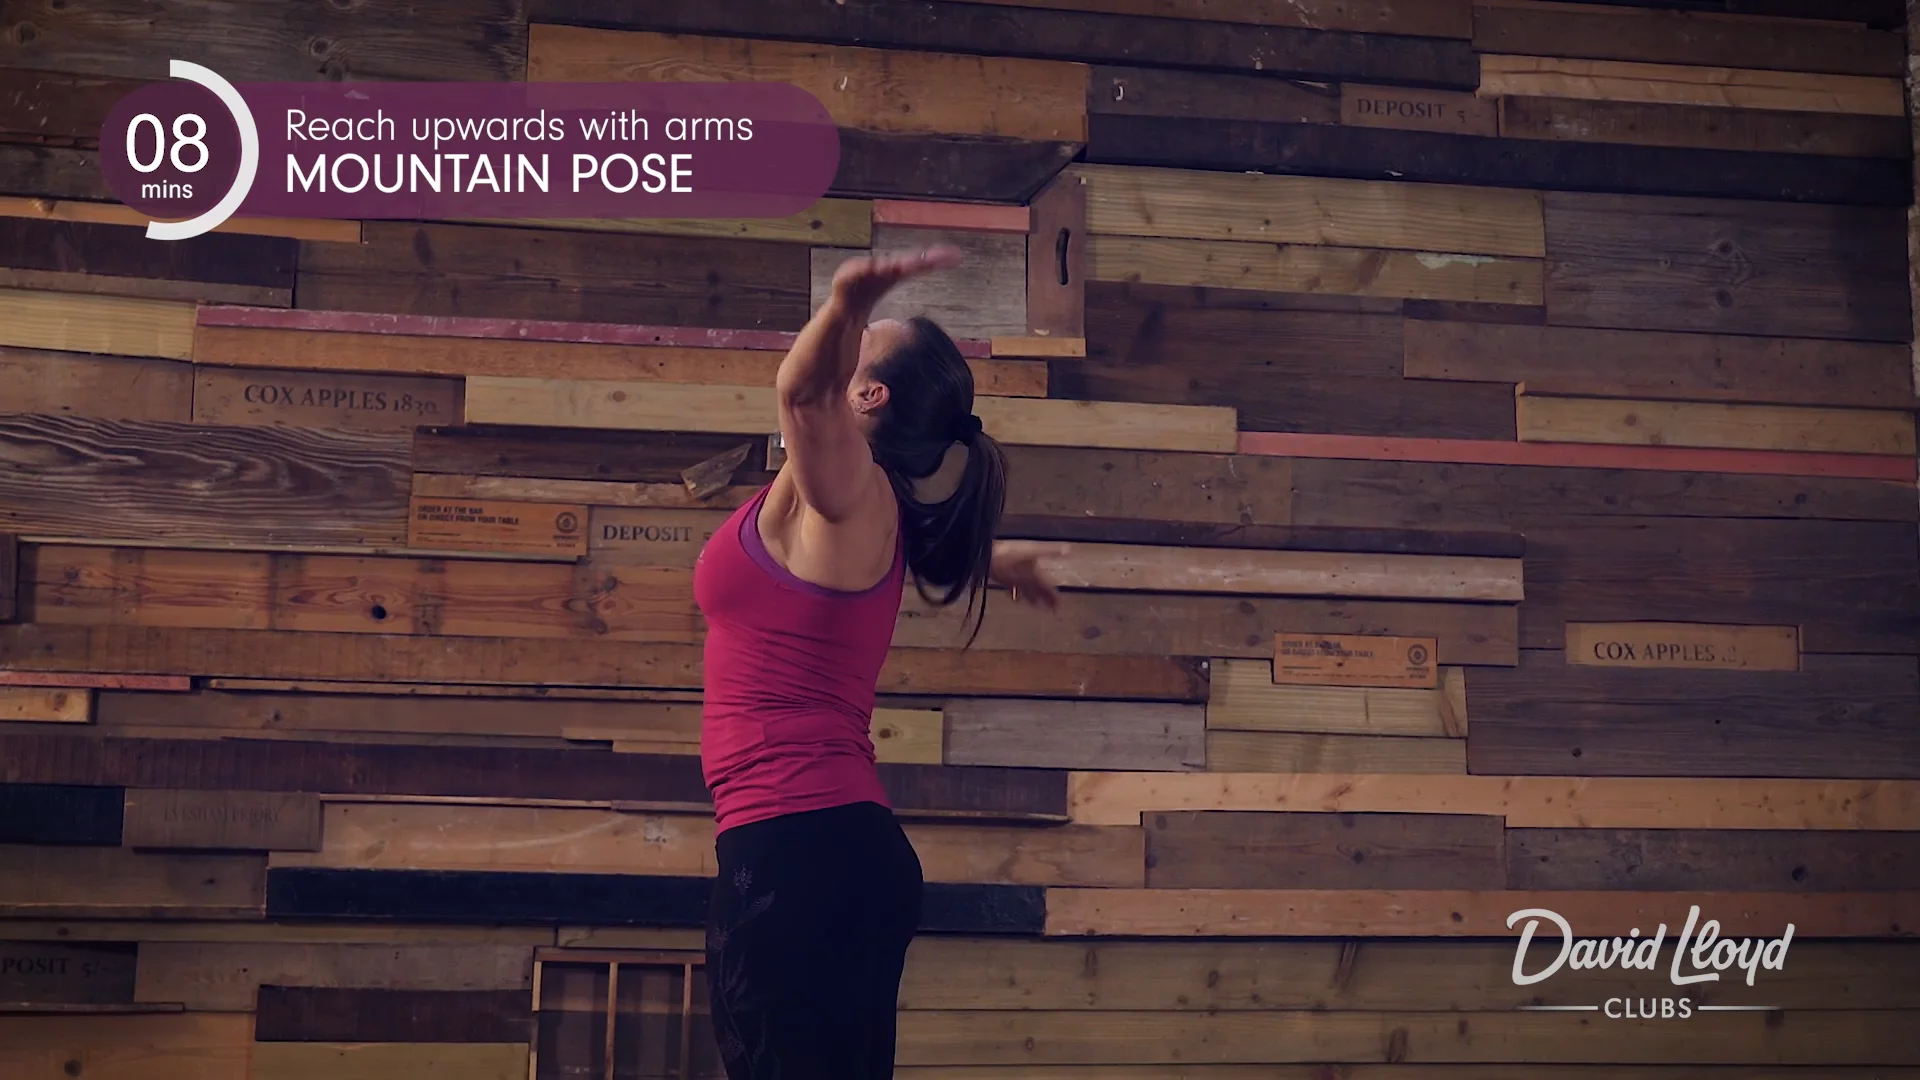 Yoga 15: Wild Thing on Vimeo